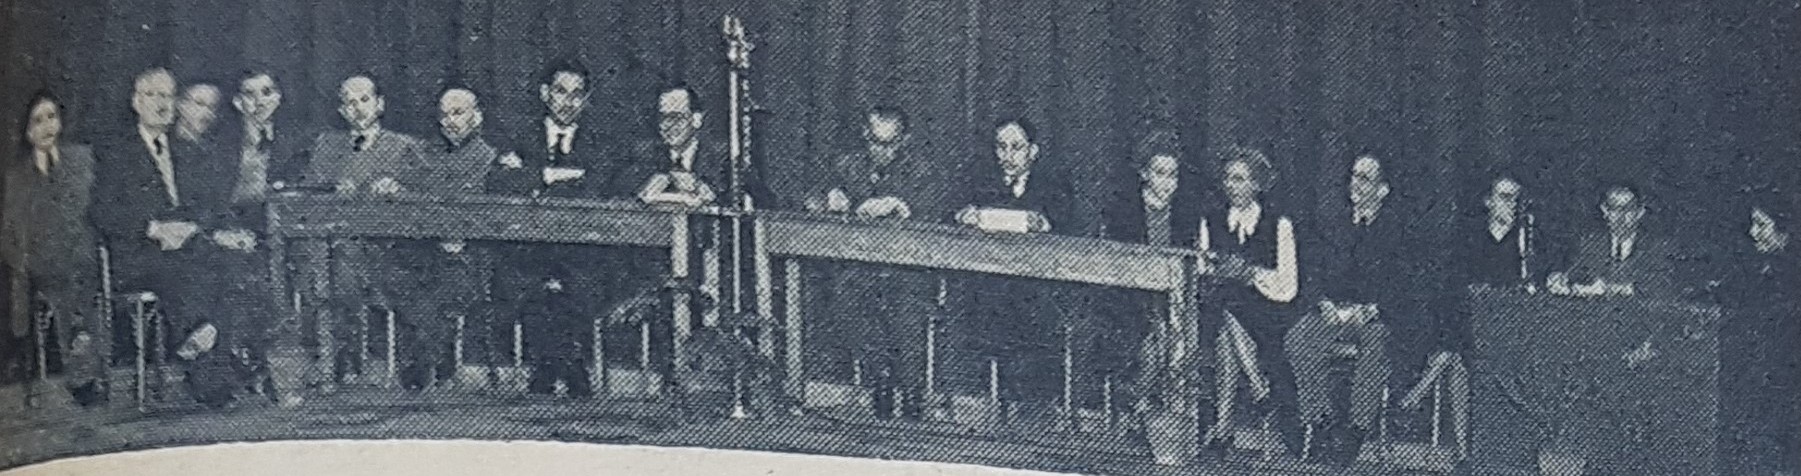 listeners panel Ohel Theater, Jan 27, 1946